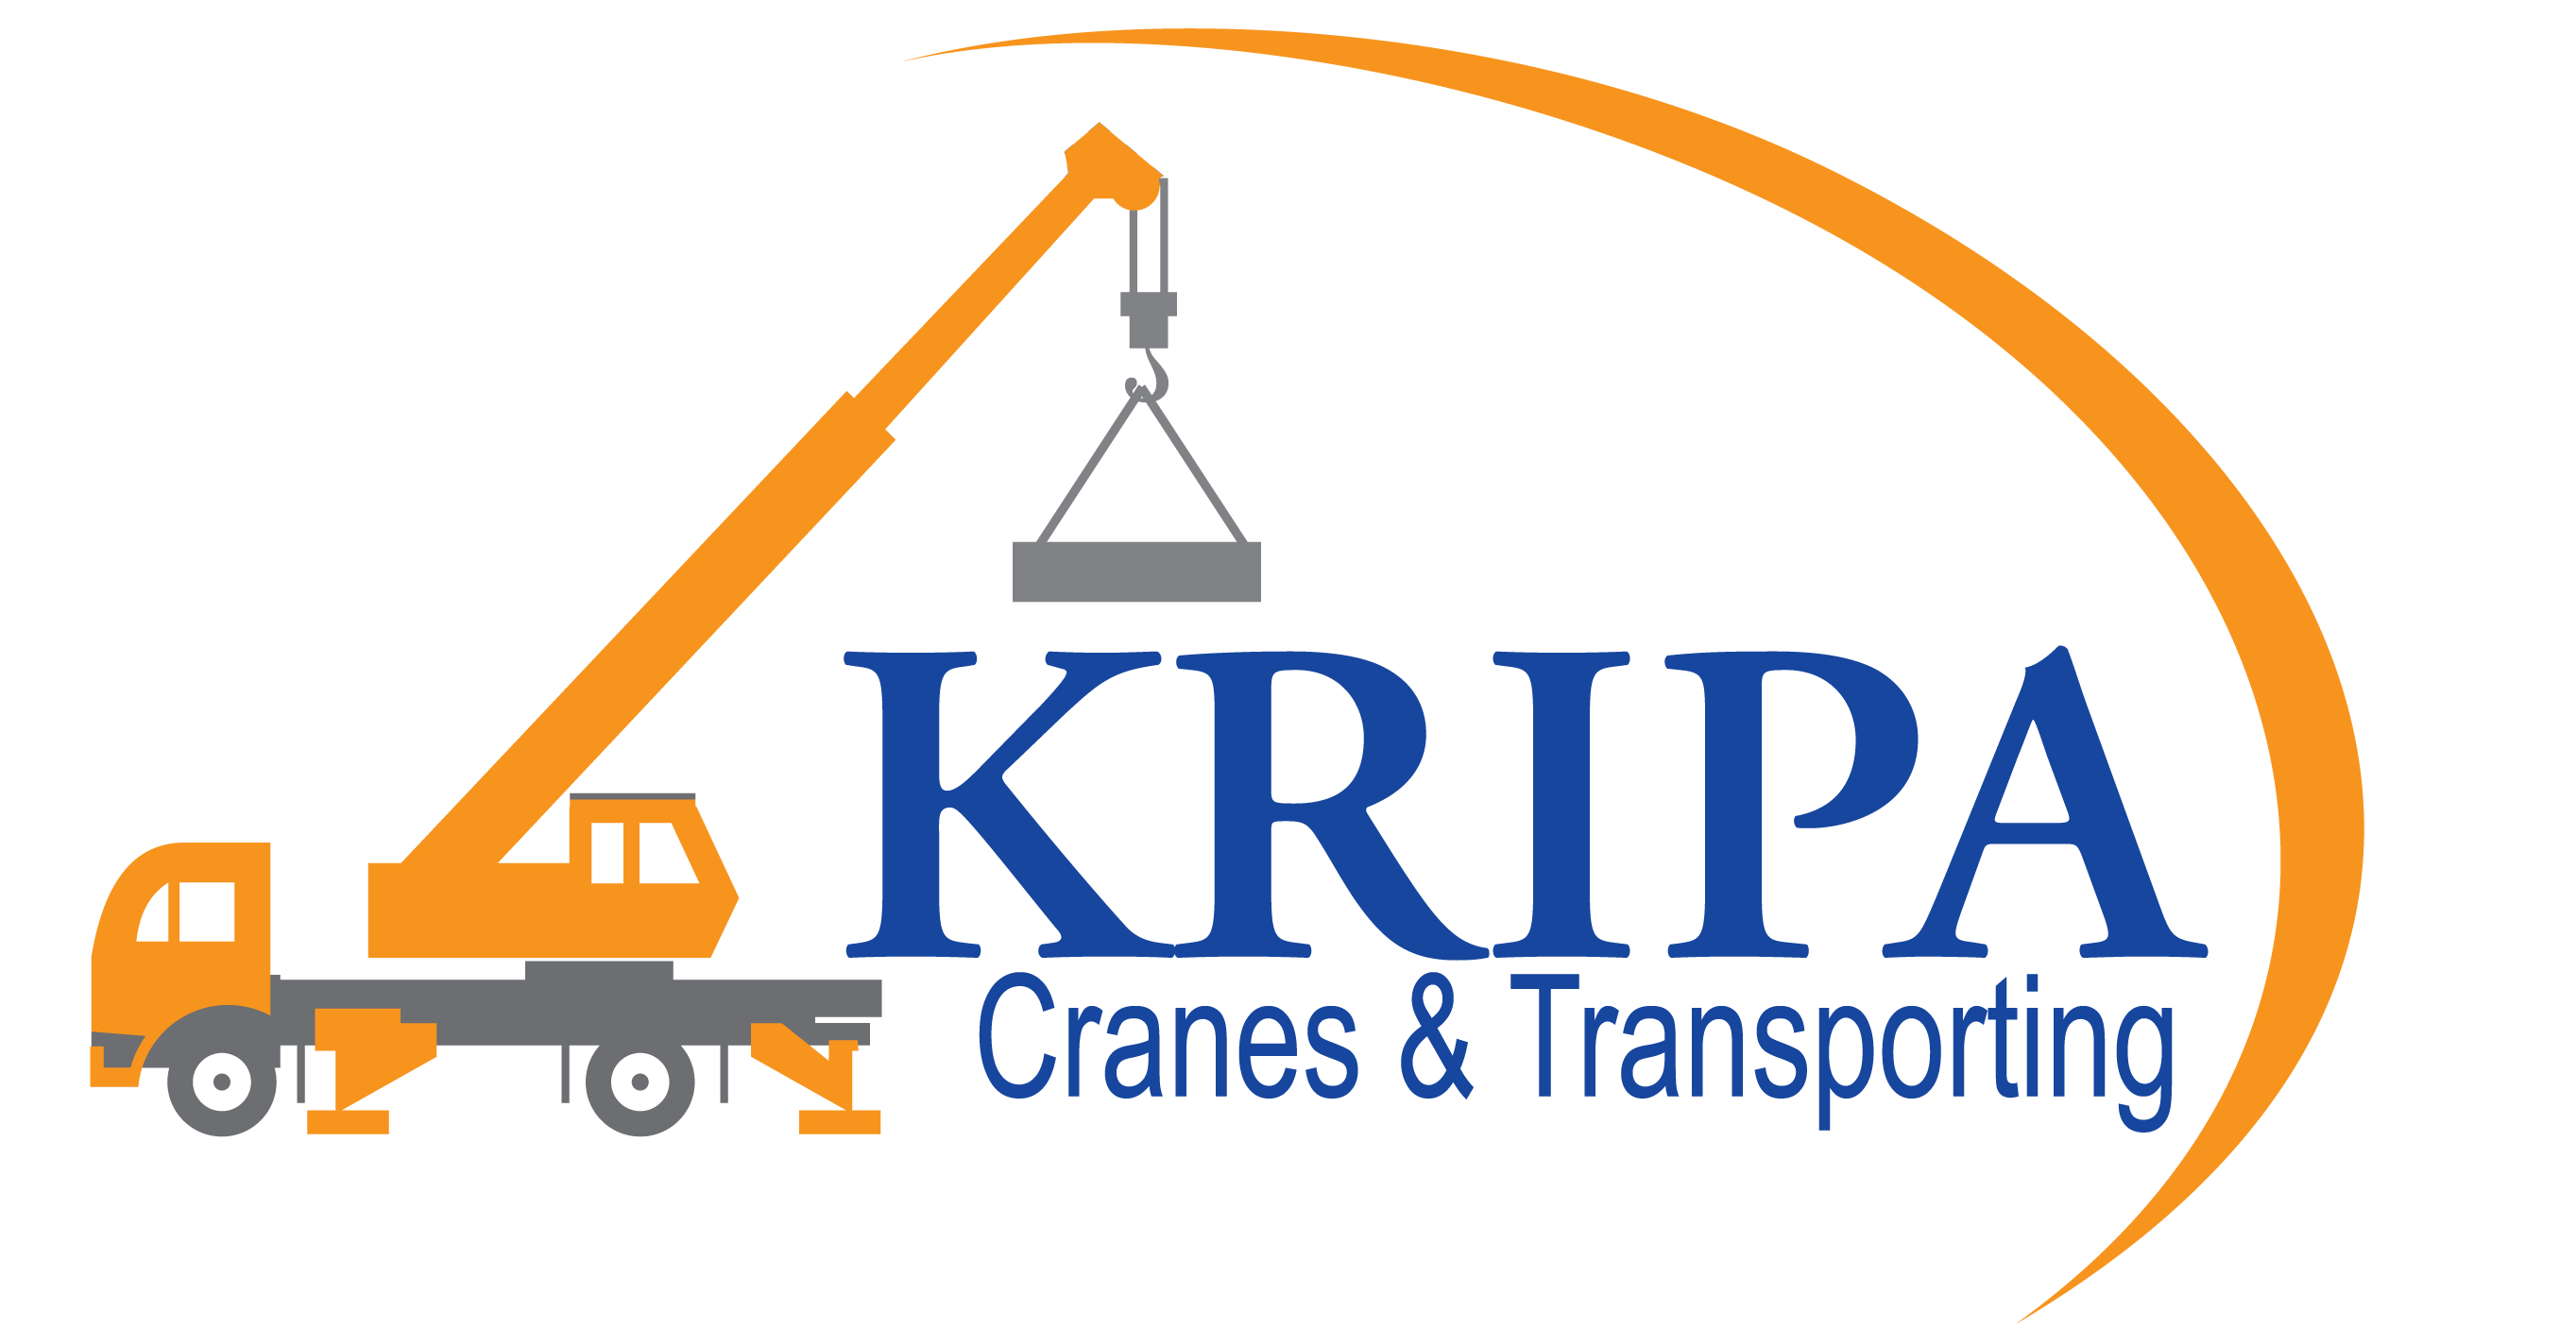 KRIPA CRANES & TRANSPORTING